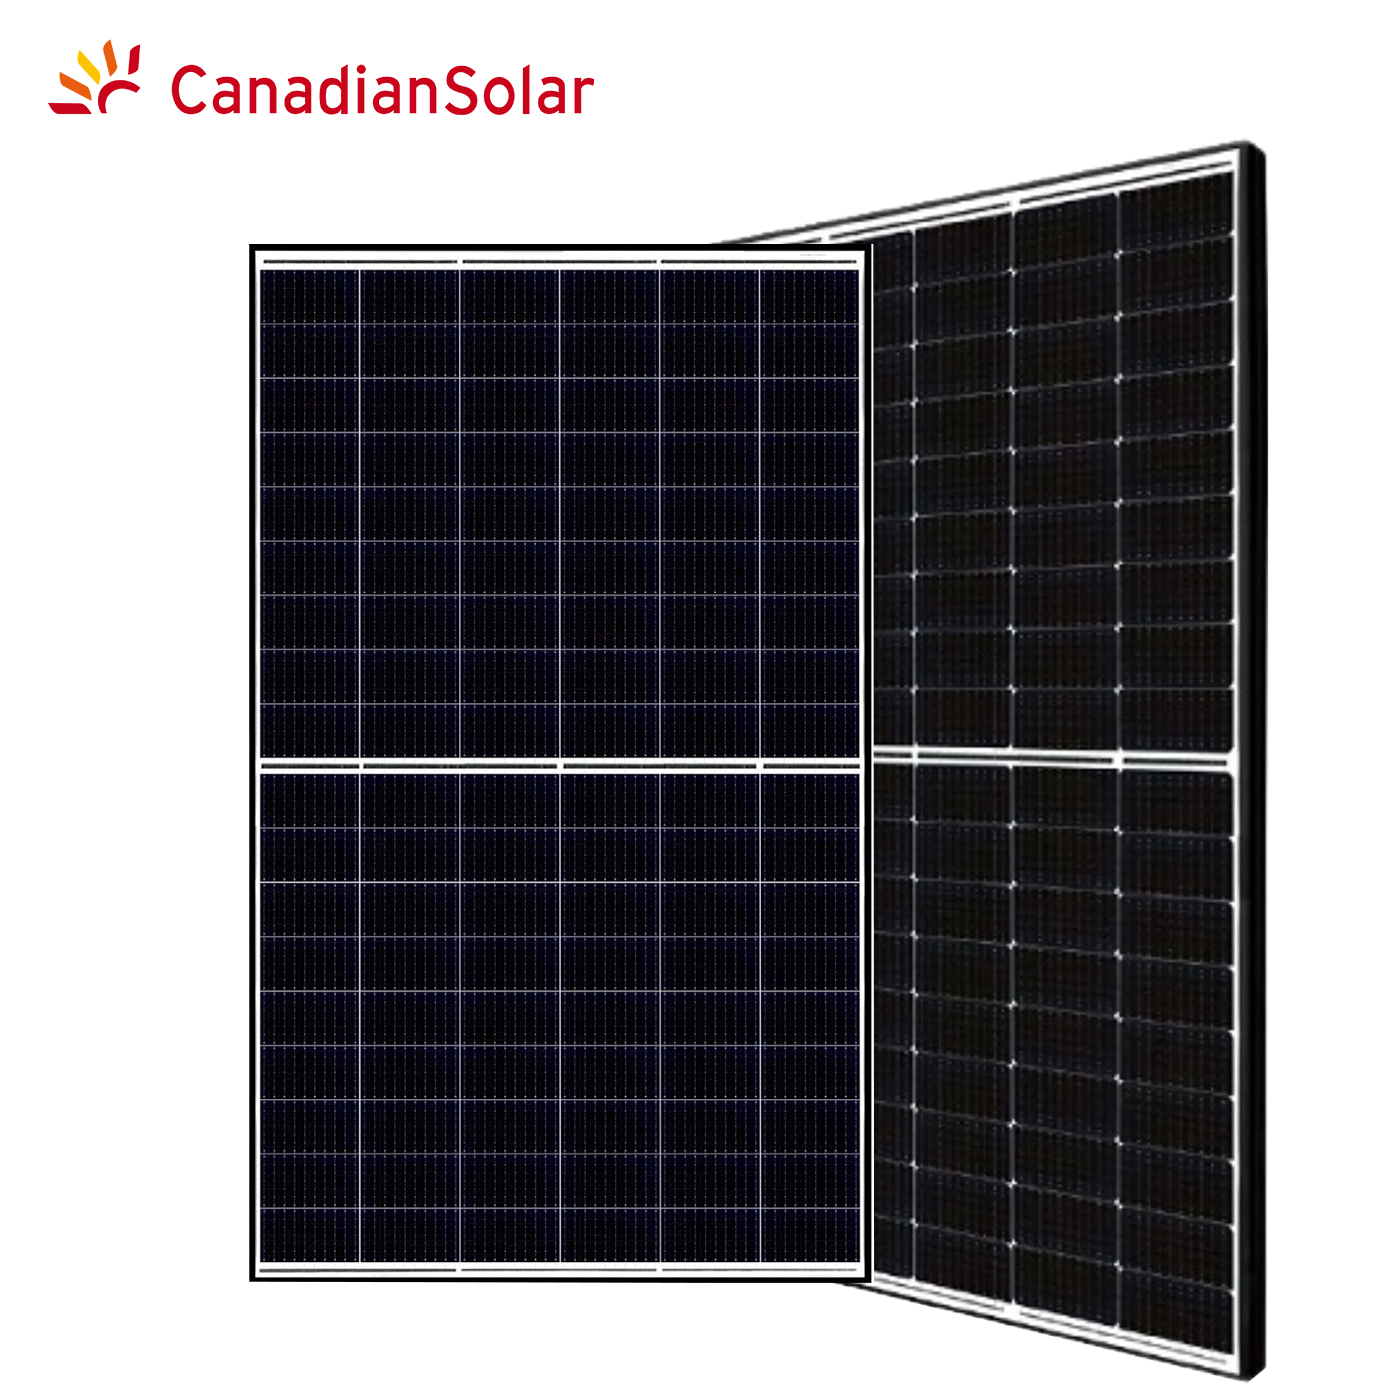 Sofar Solar 10 kW PV-Komplettset mit Notstromfunktion